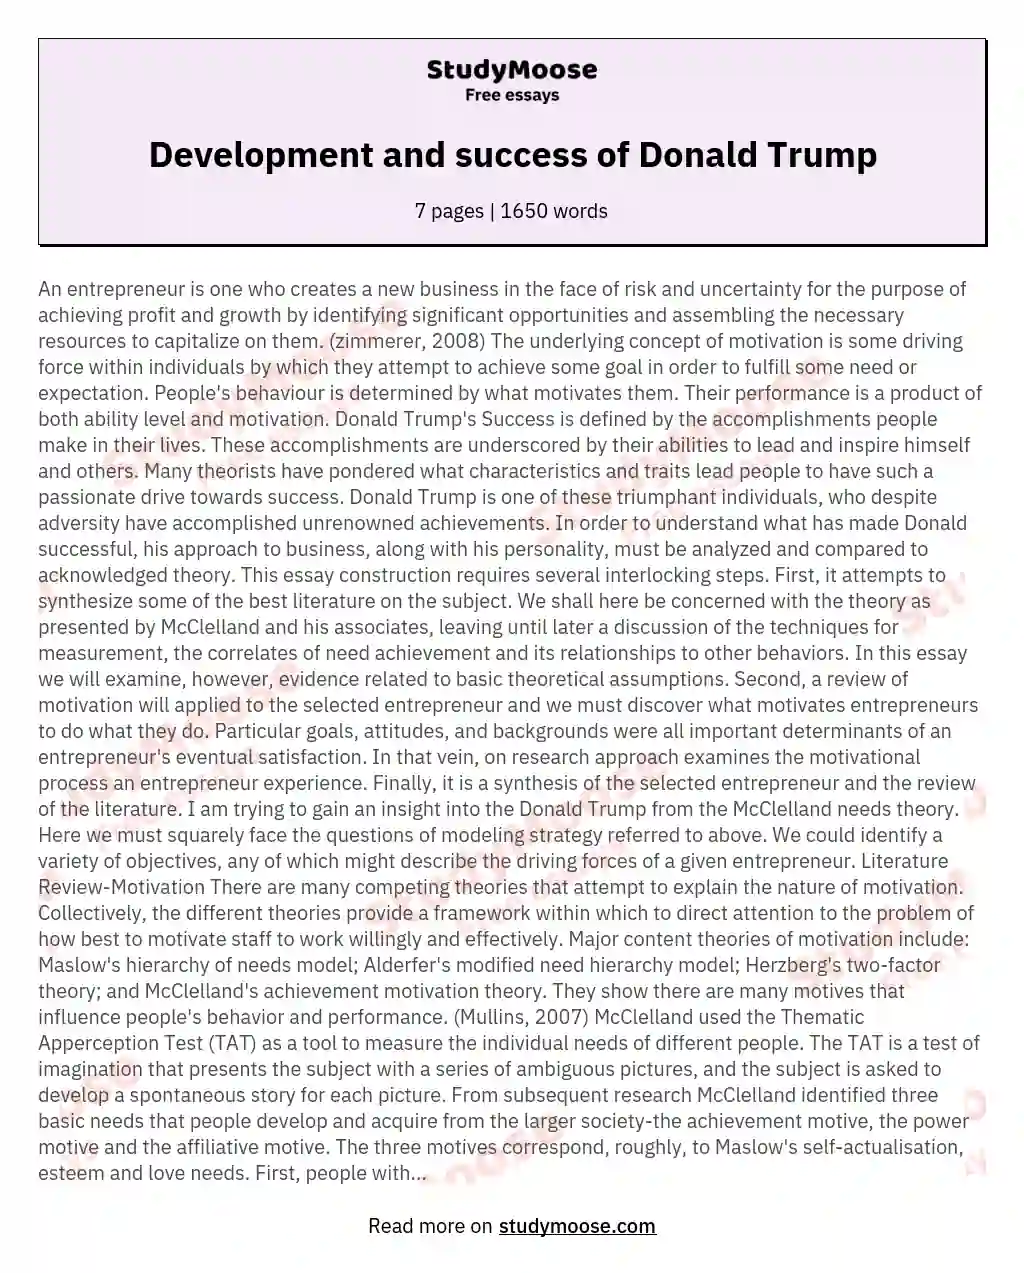 Development and success of Donald Trump essay